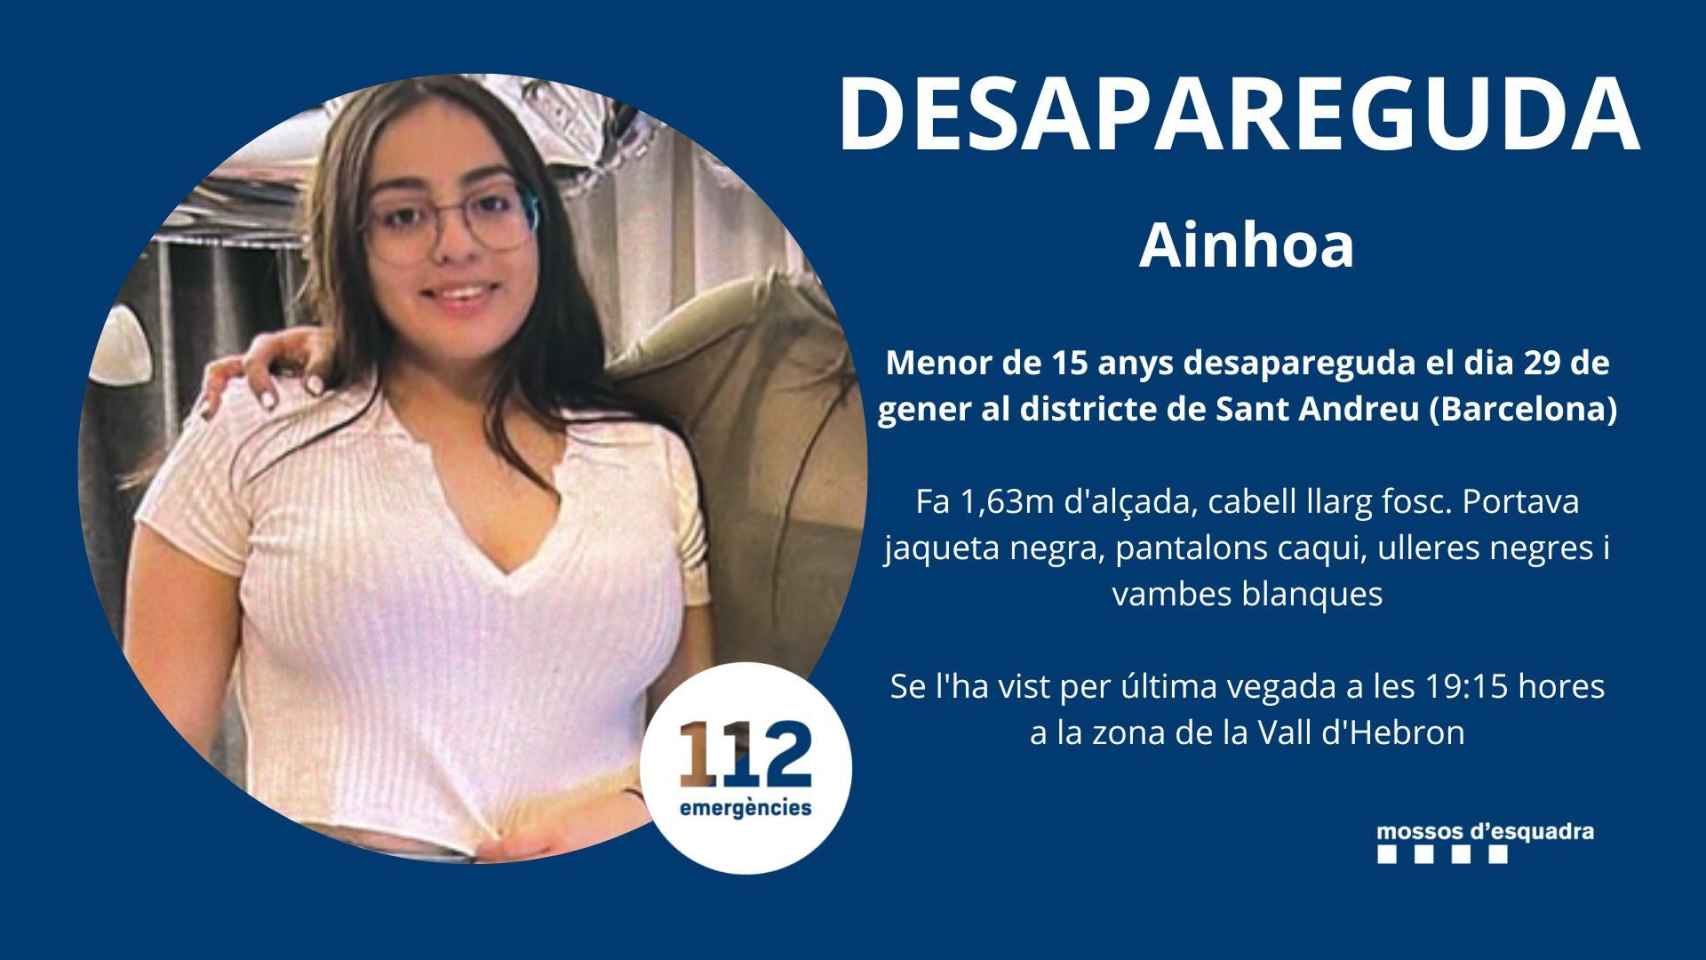 Imagen de Ainhoa del aviso por desaparición emitido por los Mossos d'Esquadra / TWITTER MOSSOS